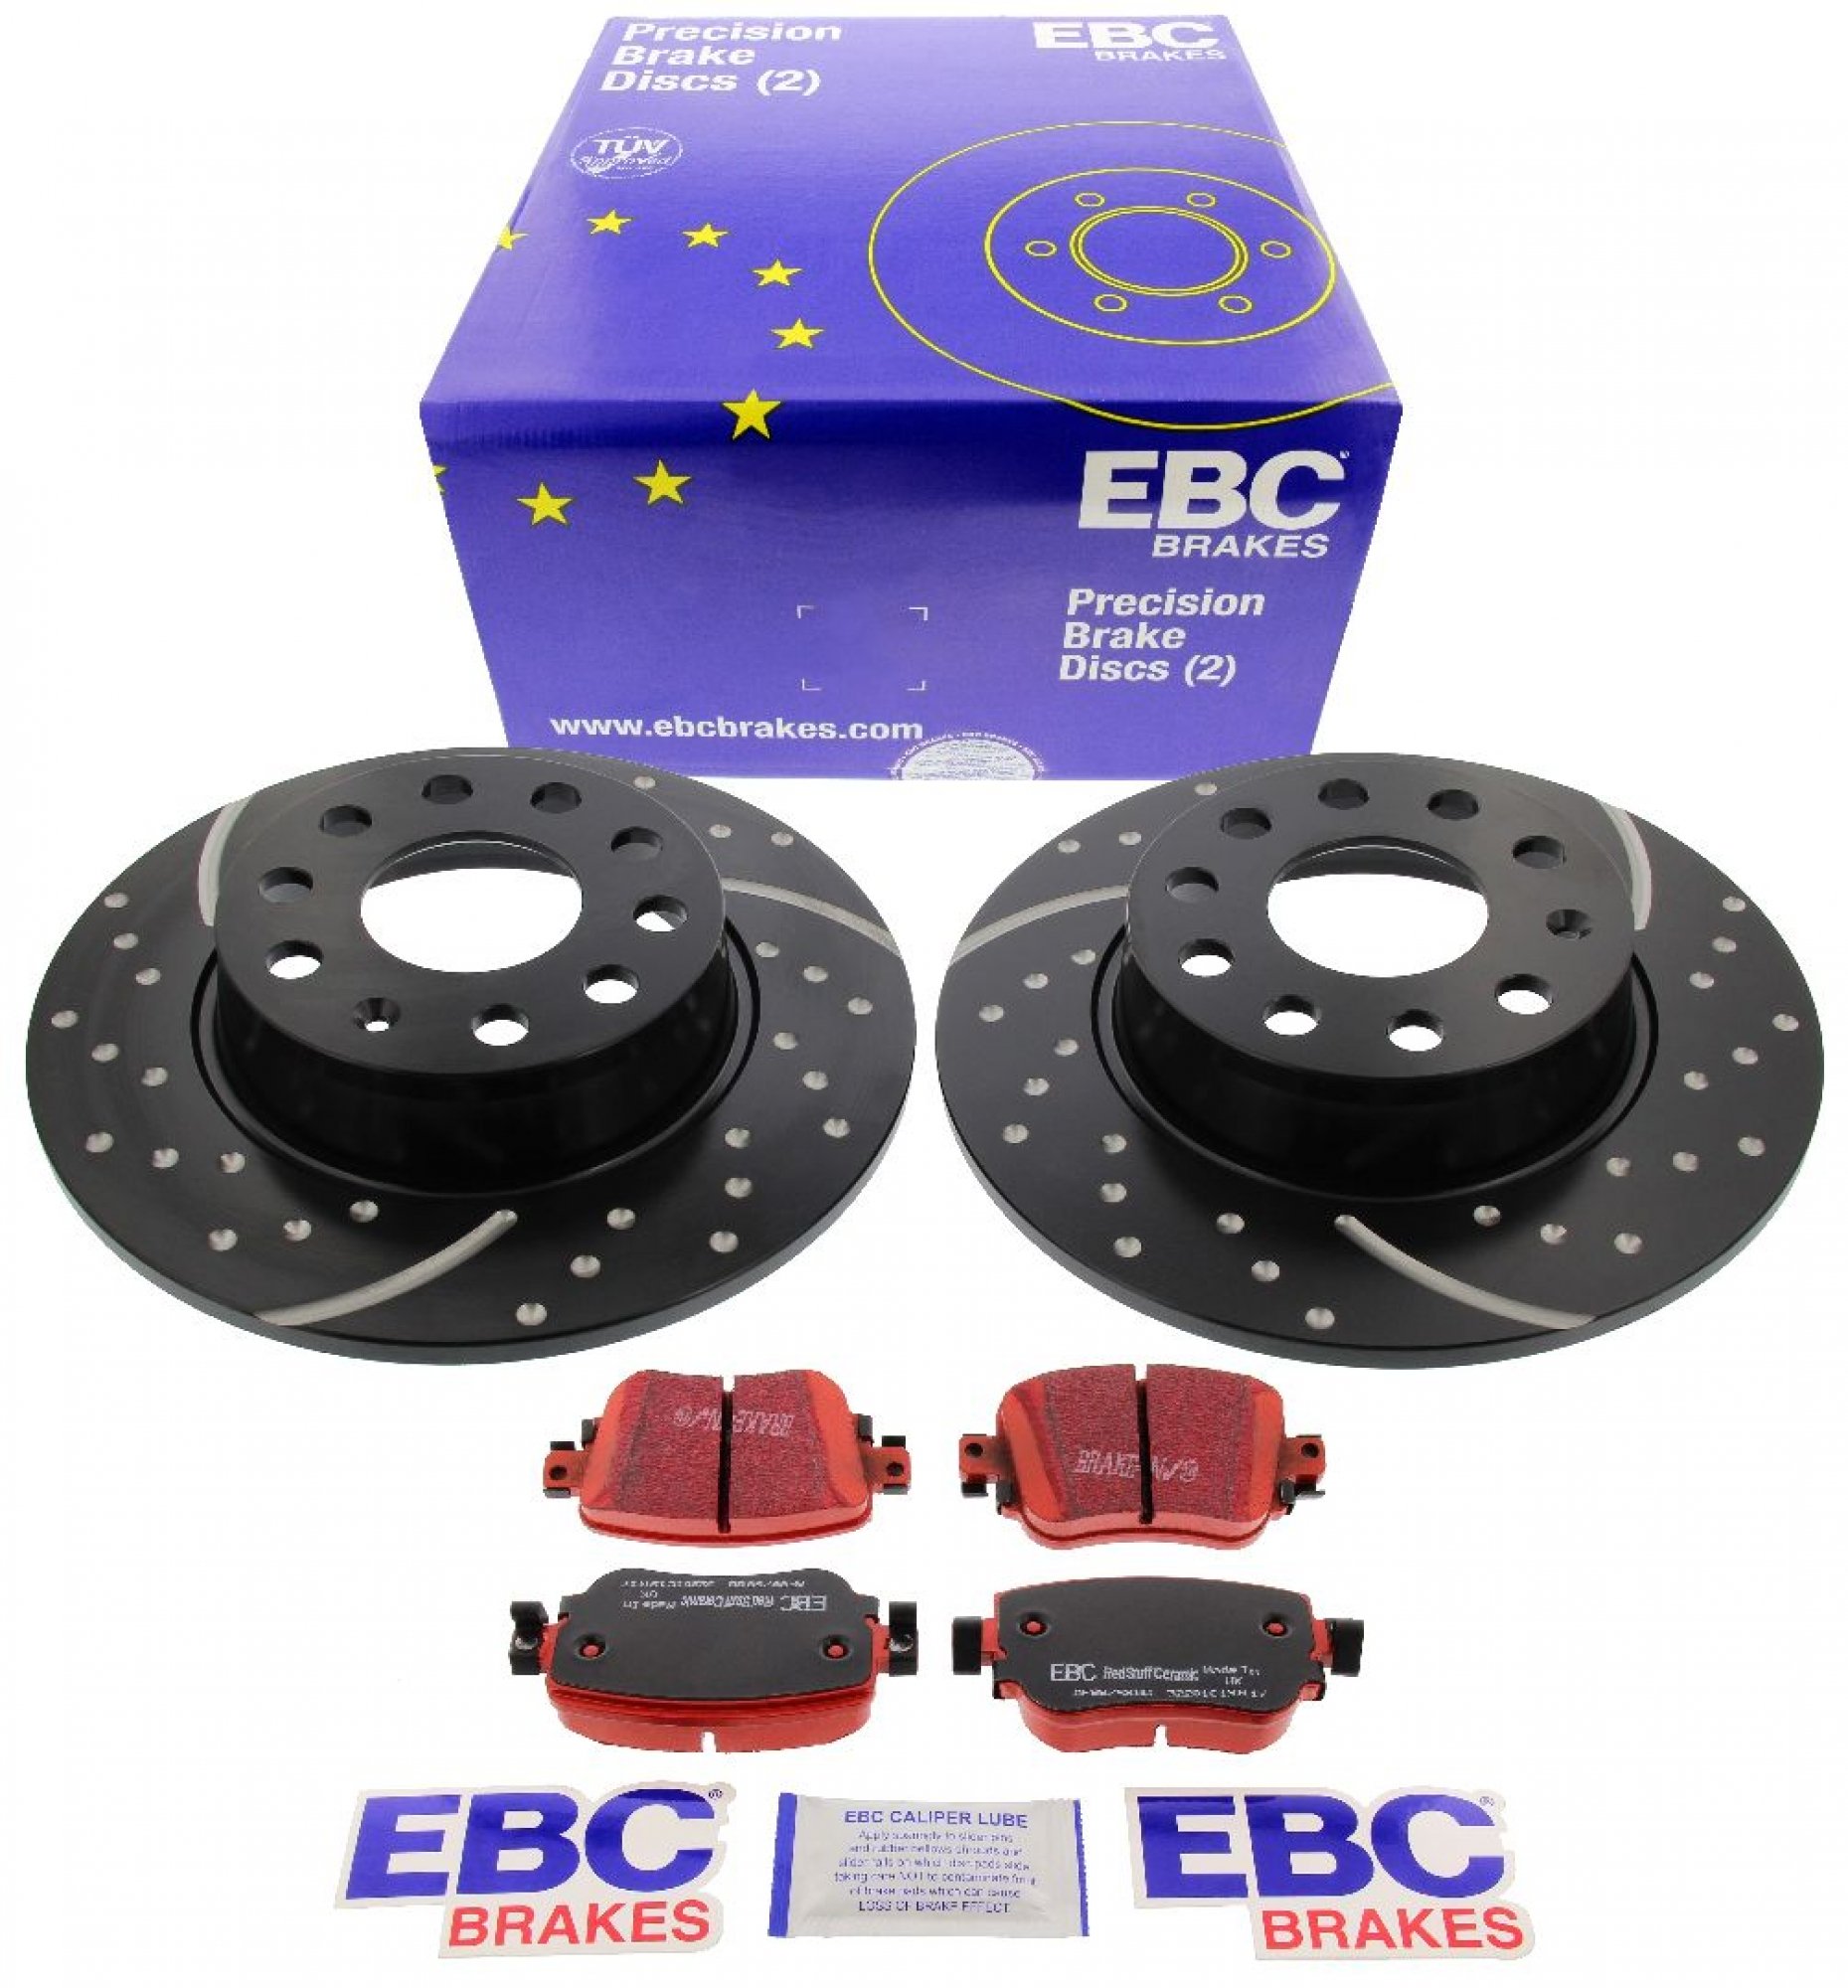 EBC-Bremsensatz, Turbo Groove Disc Black + Bremsbeläge, Redstuff Ceramic, Achssatz, HA, Audi, Seat, Skoda, VW